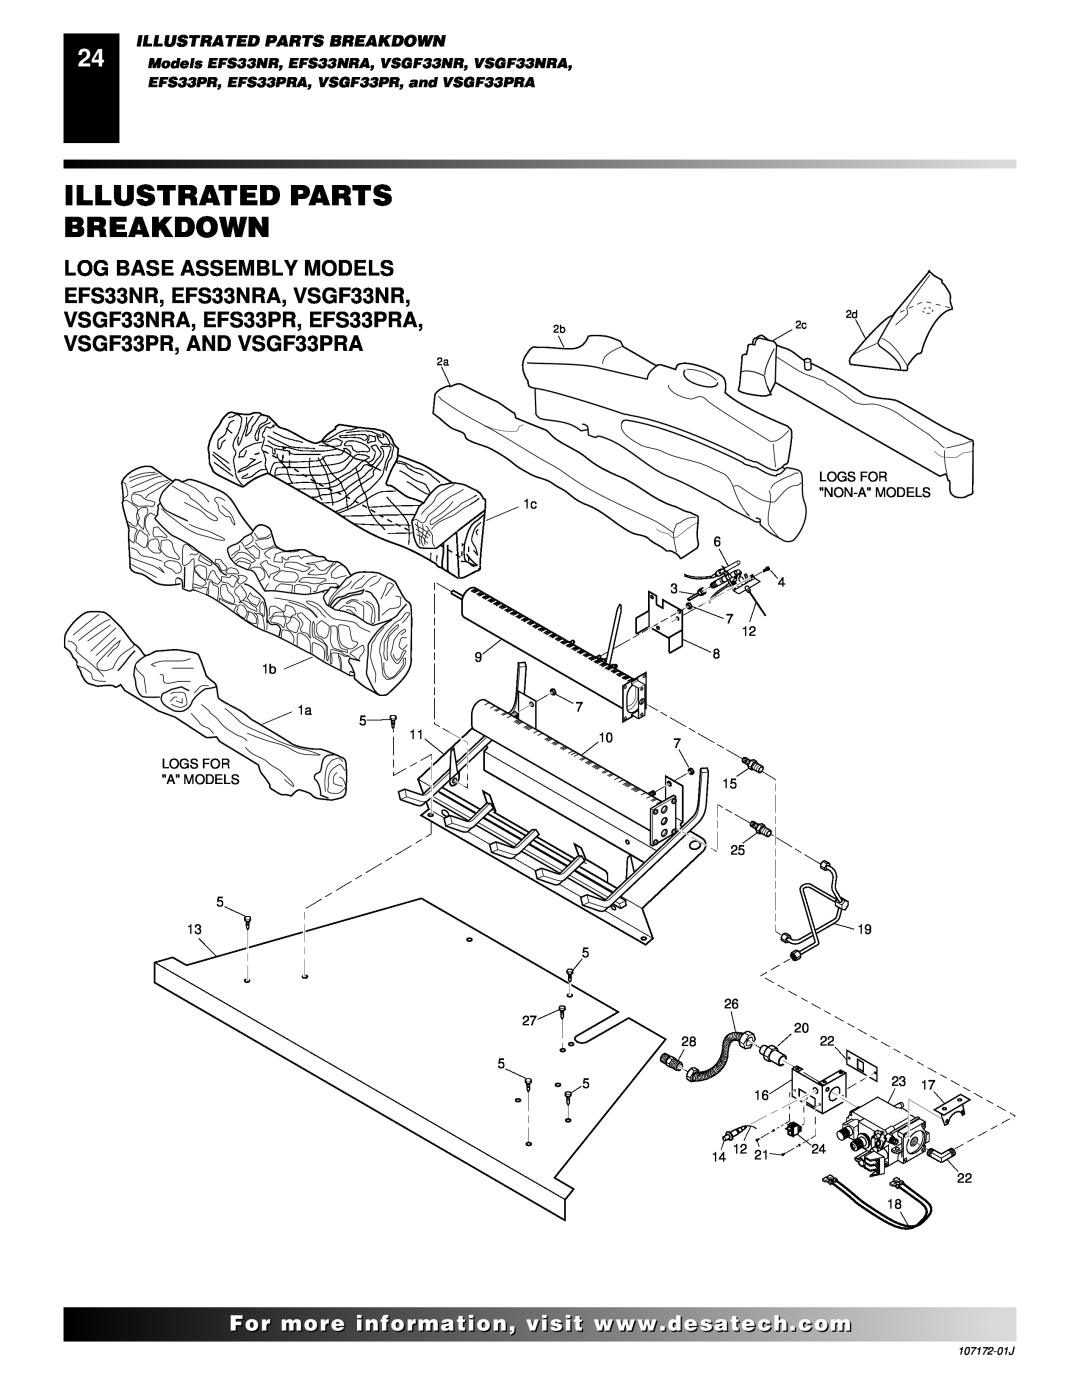 Desa EFS33PRA installation manual Illustrated Parts Breakdown, 107172-01J 